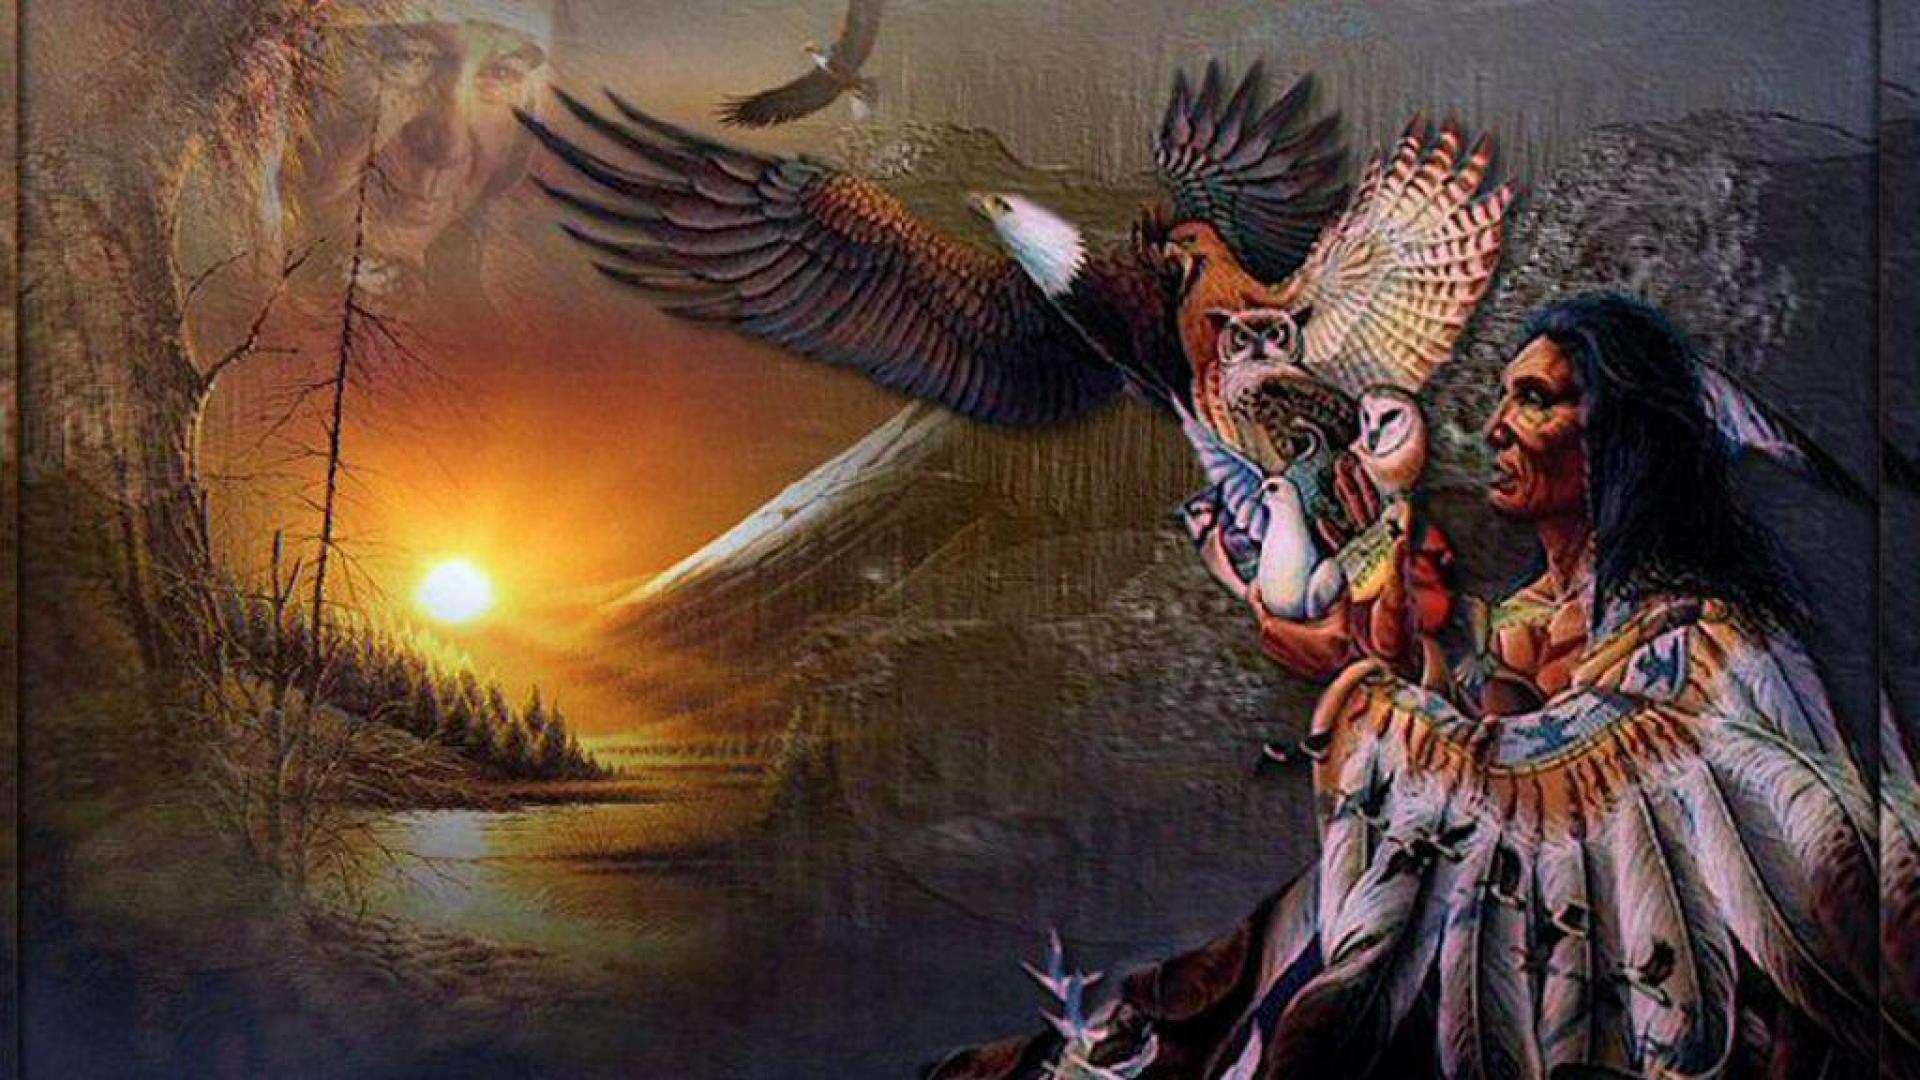 Native American Indian Wallpaper